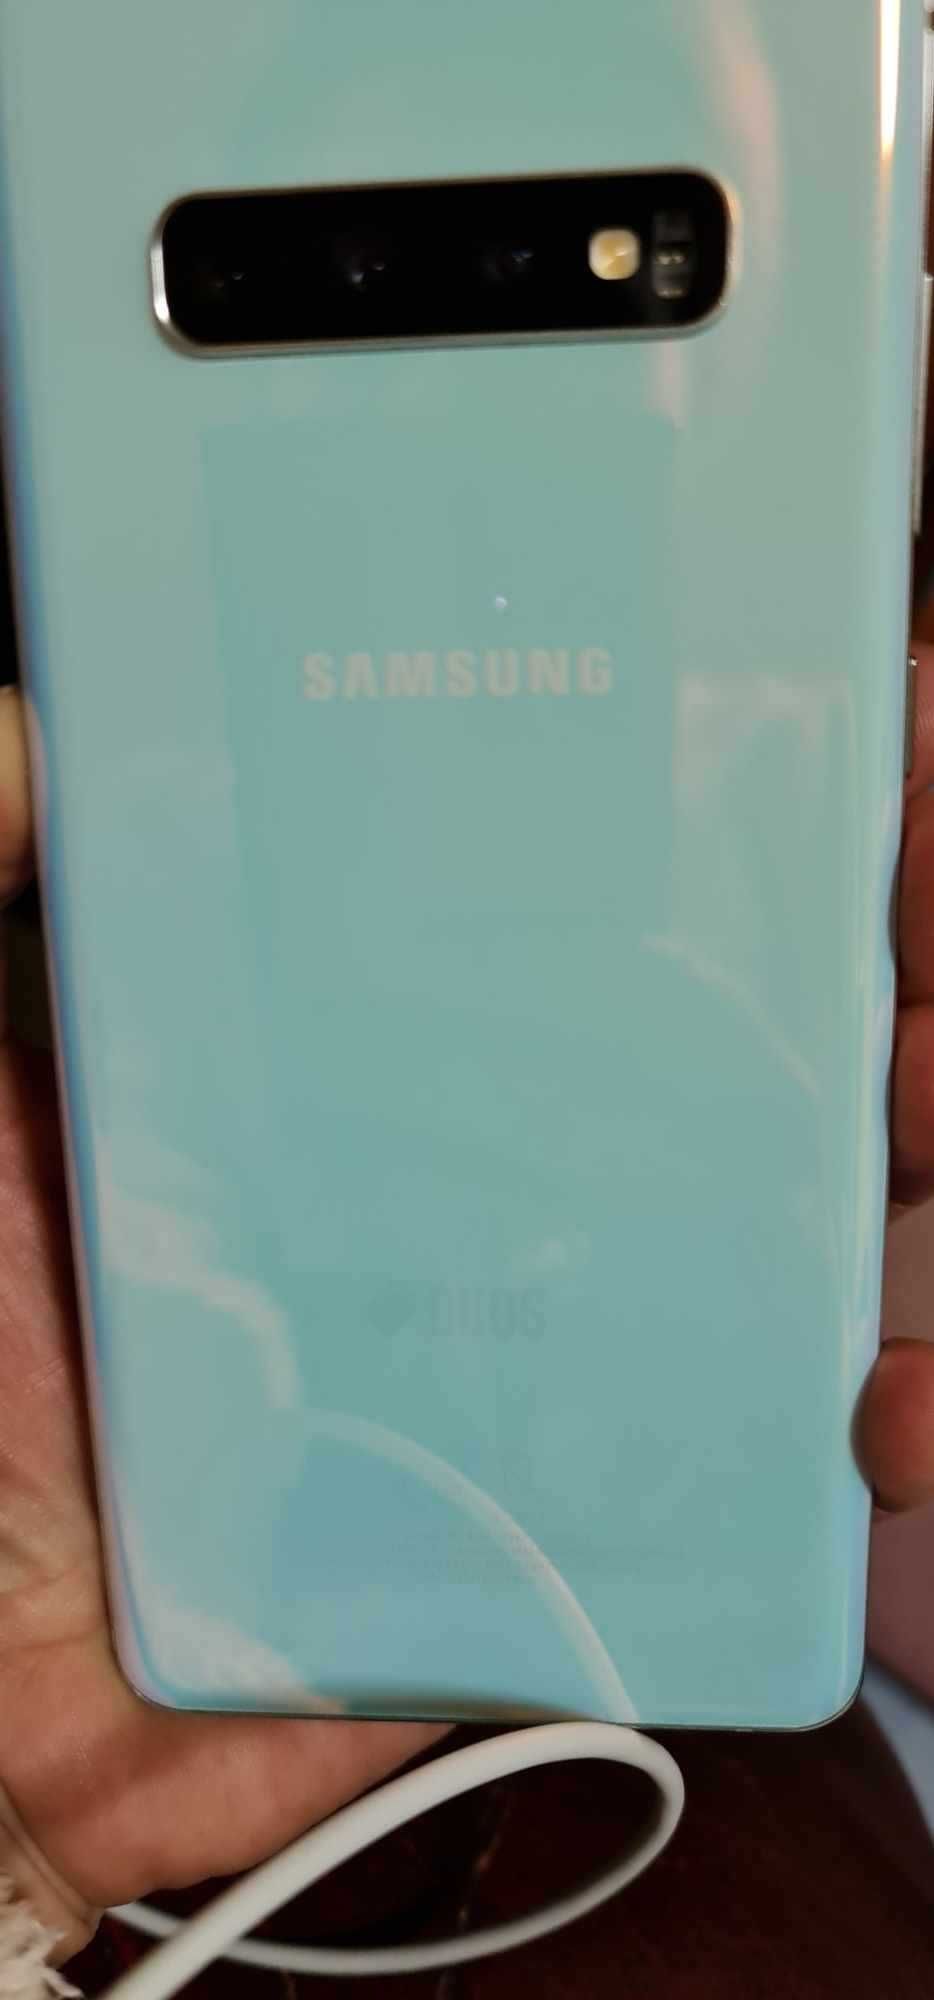 Samsung S10 +, liber de retea, incarcator, cheita, cutie